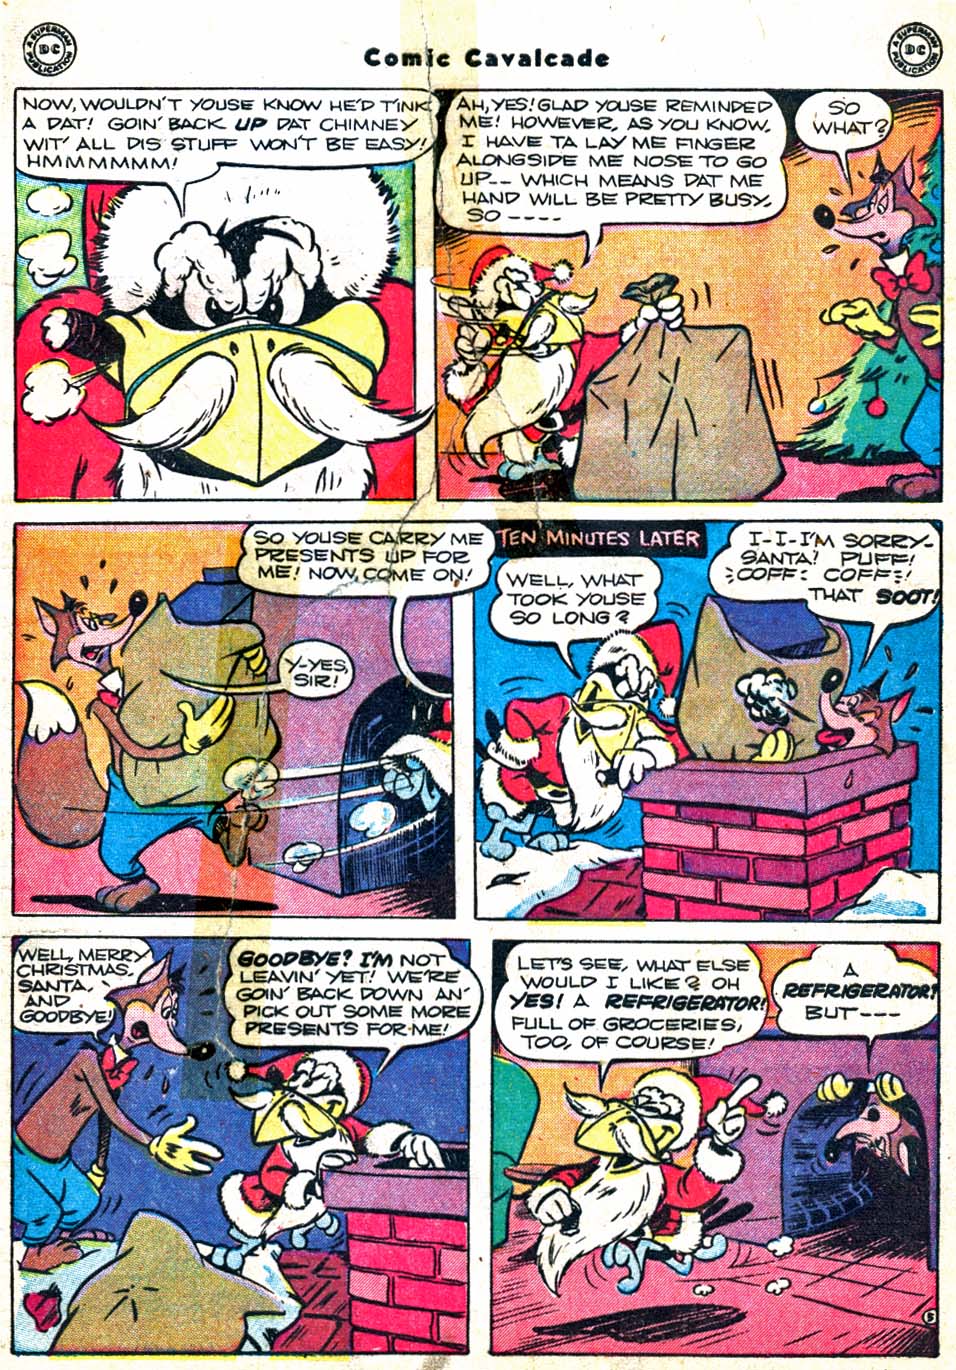 Comic Cavalcade issue 31 - Page 7